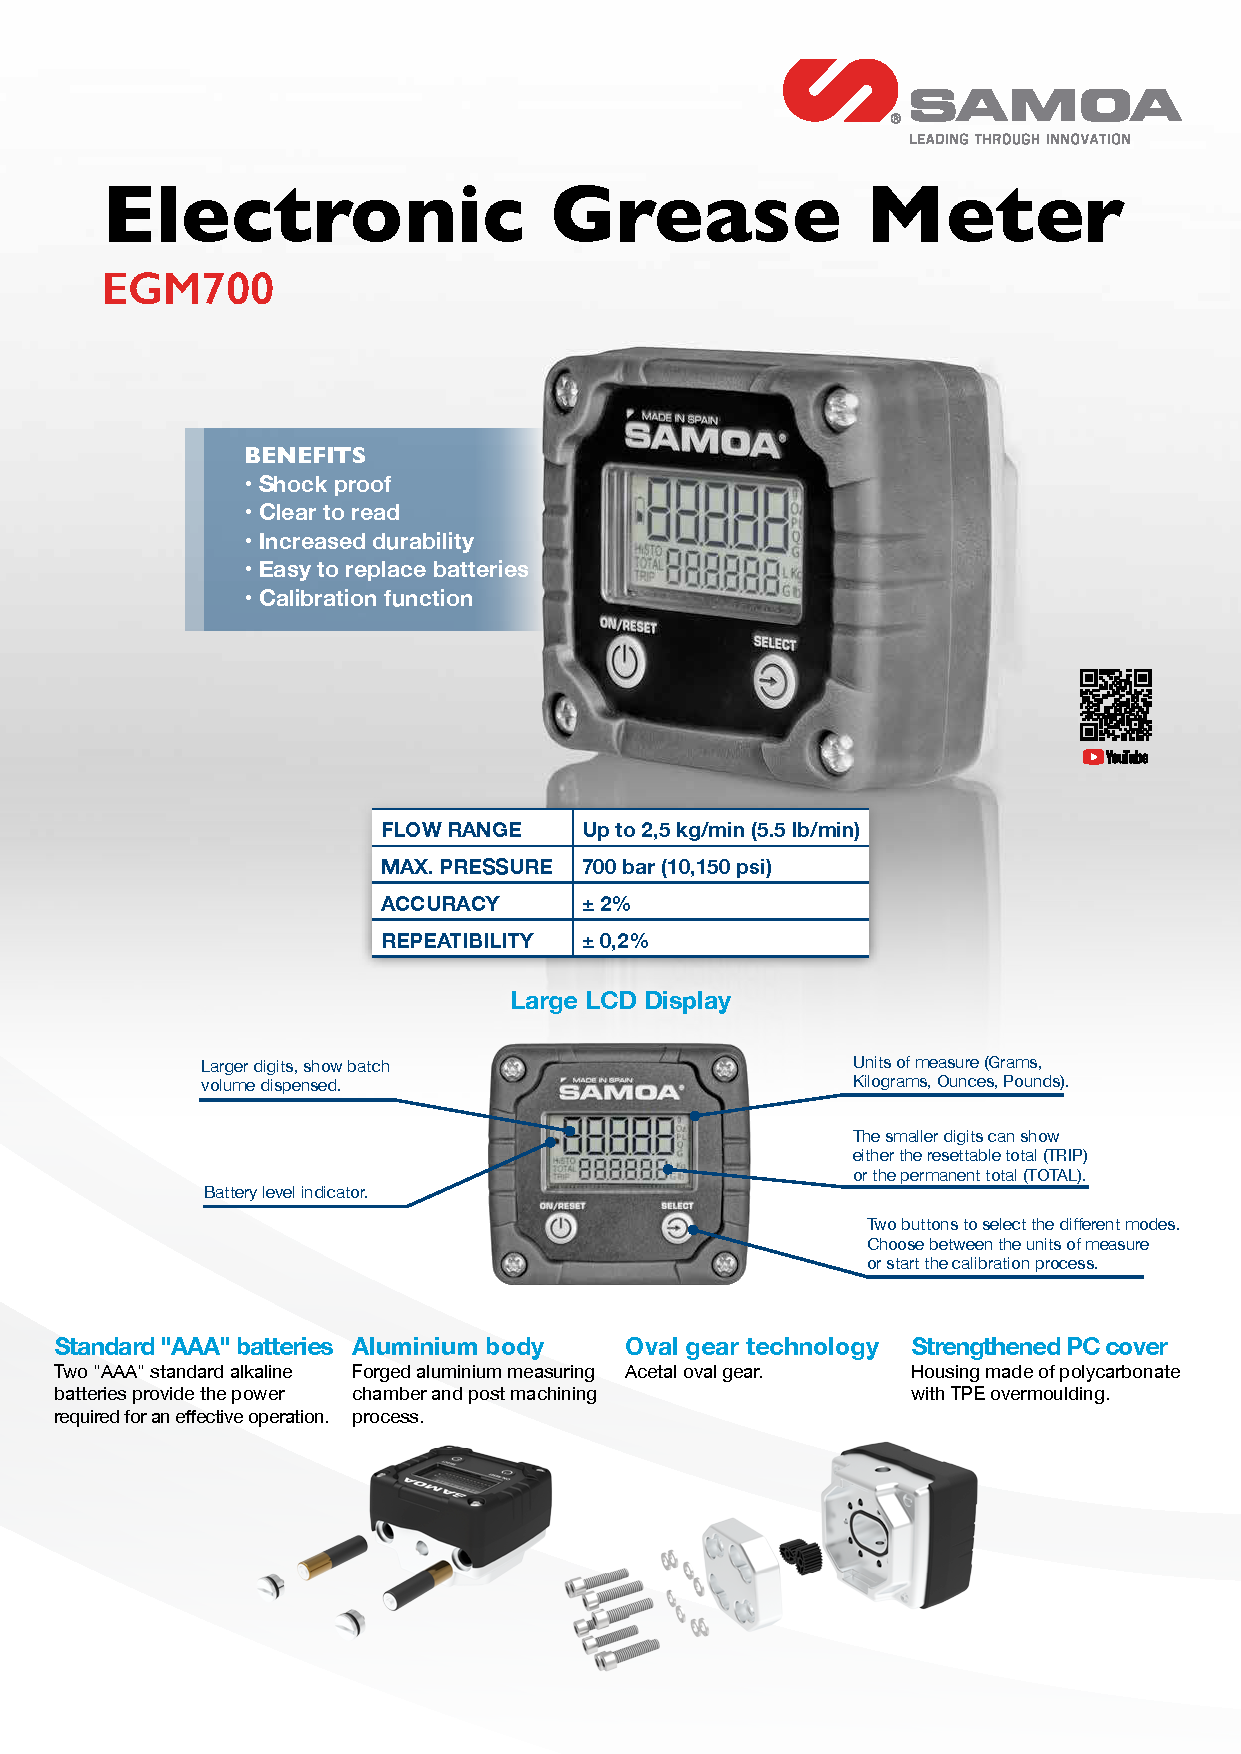 411110 - SAMOA EGM700 Electronic Grease Meter